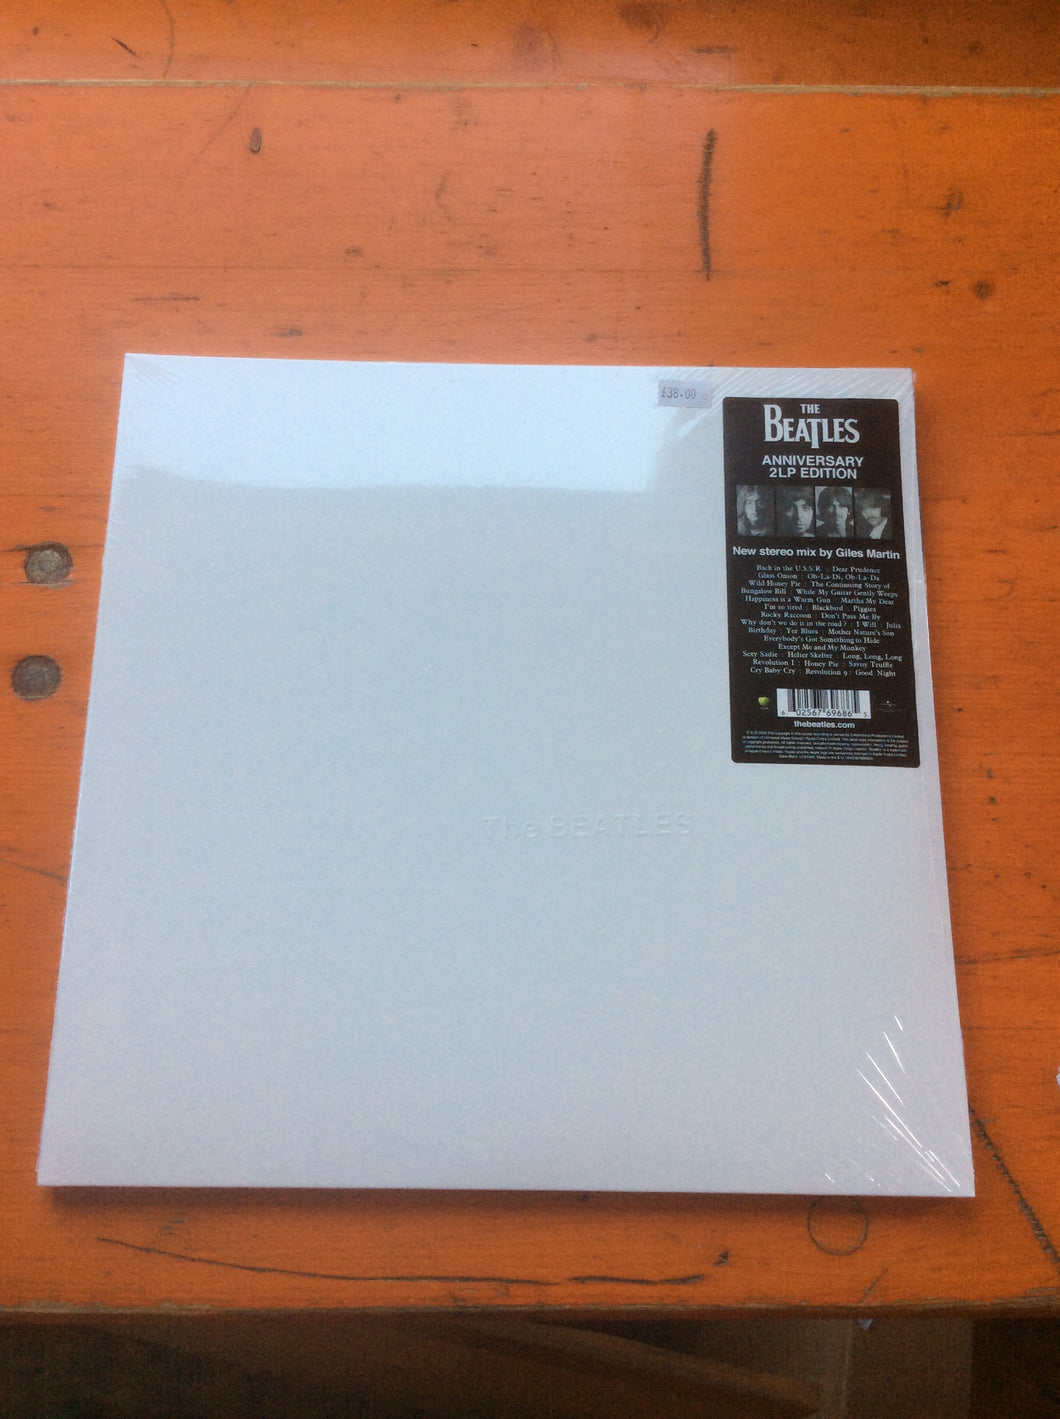 The Beatles - The Beatles (White Album) 50th Anniversary